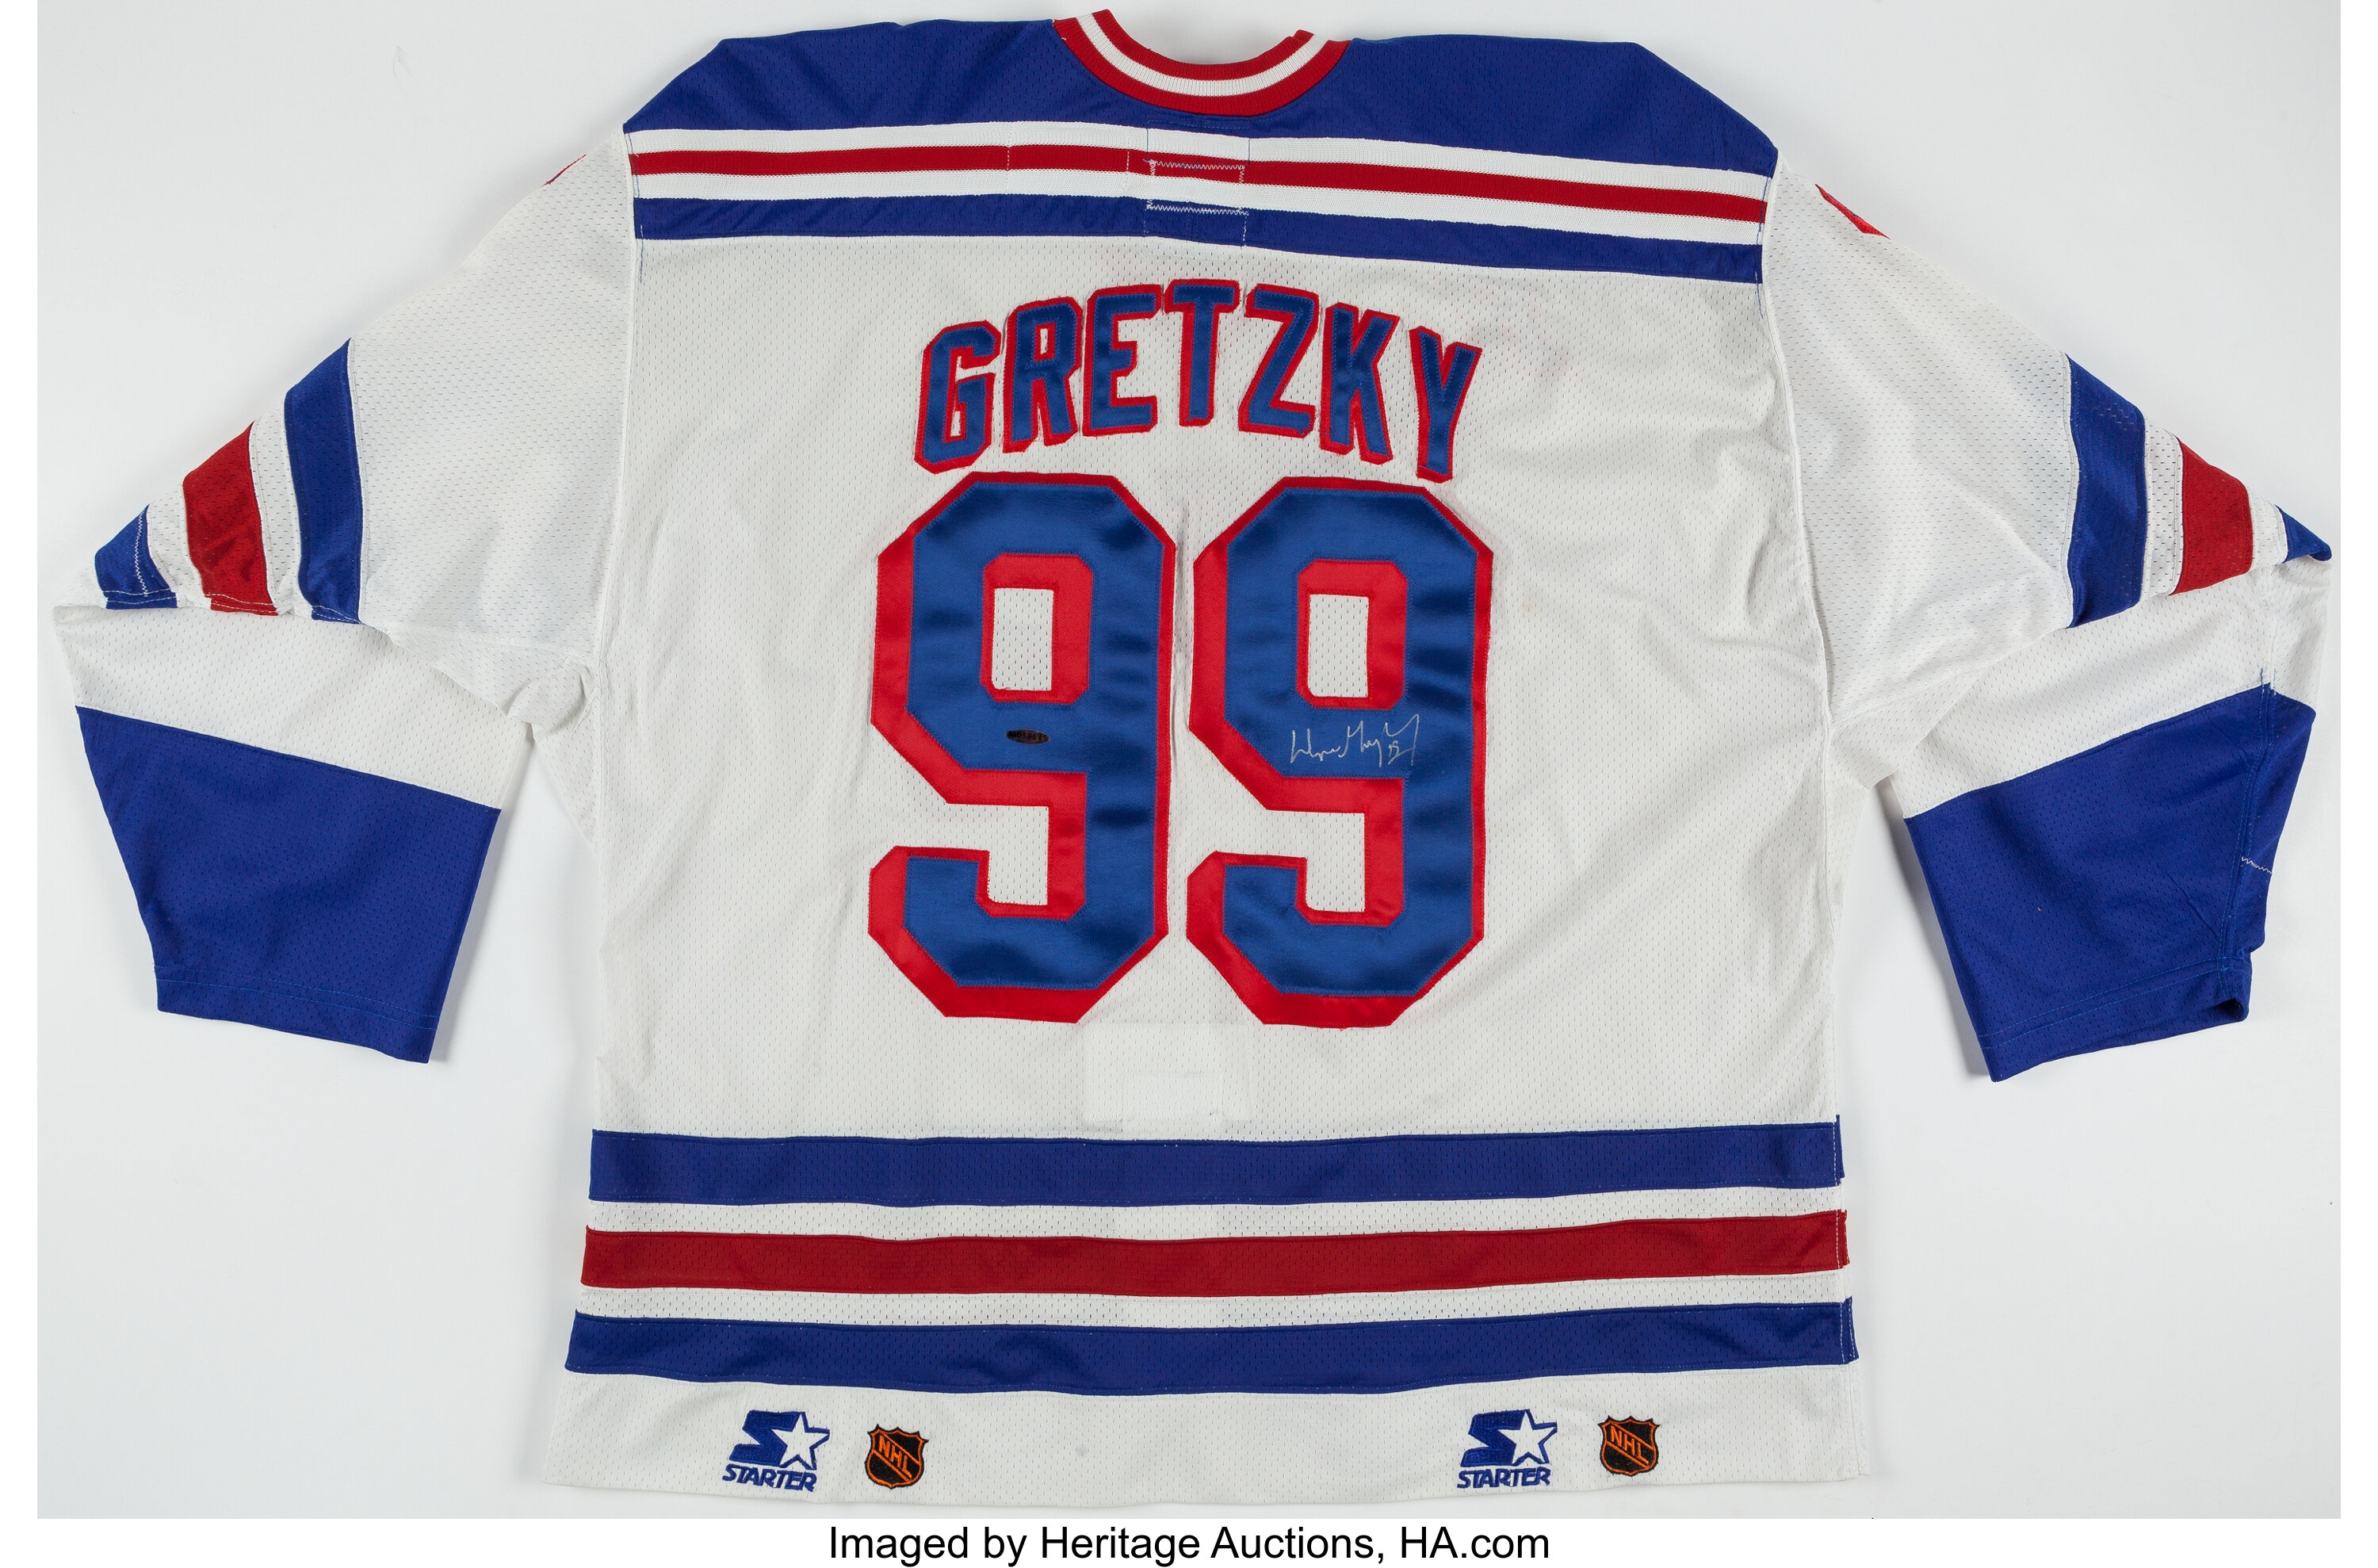 Wayne Gretzky Authentic New York Rangers NHL Jersey - New York